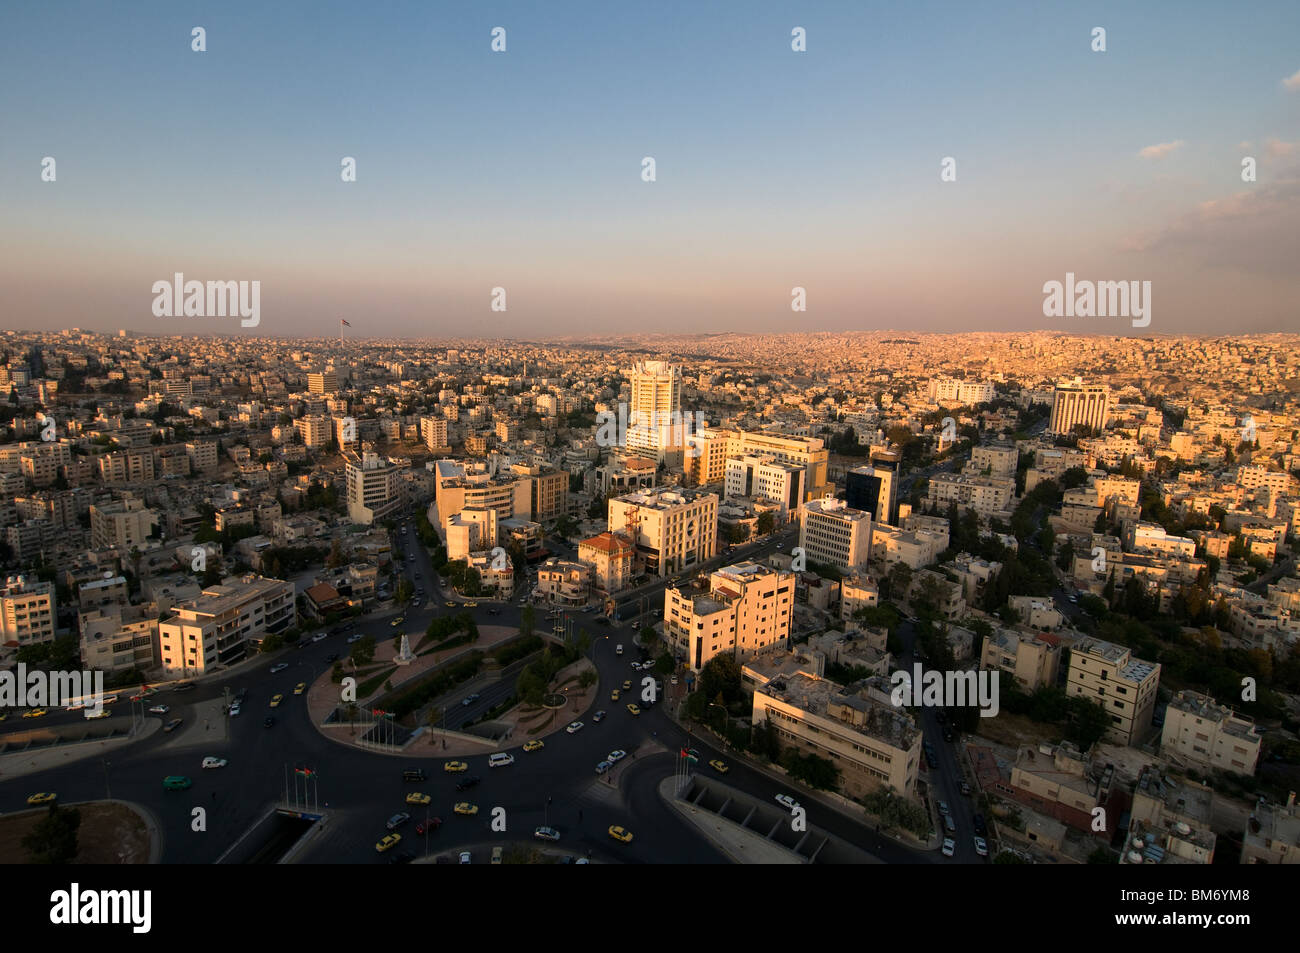 General view of downtown Amman capital of the Hashemite Kingdom of Jordan Stock Photo